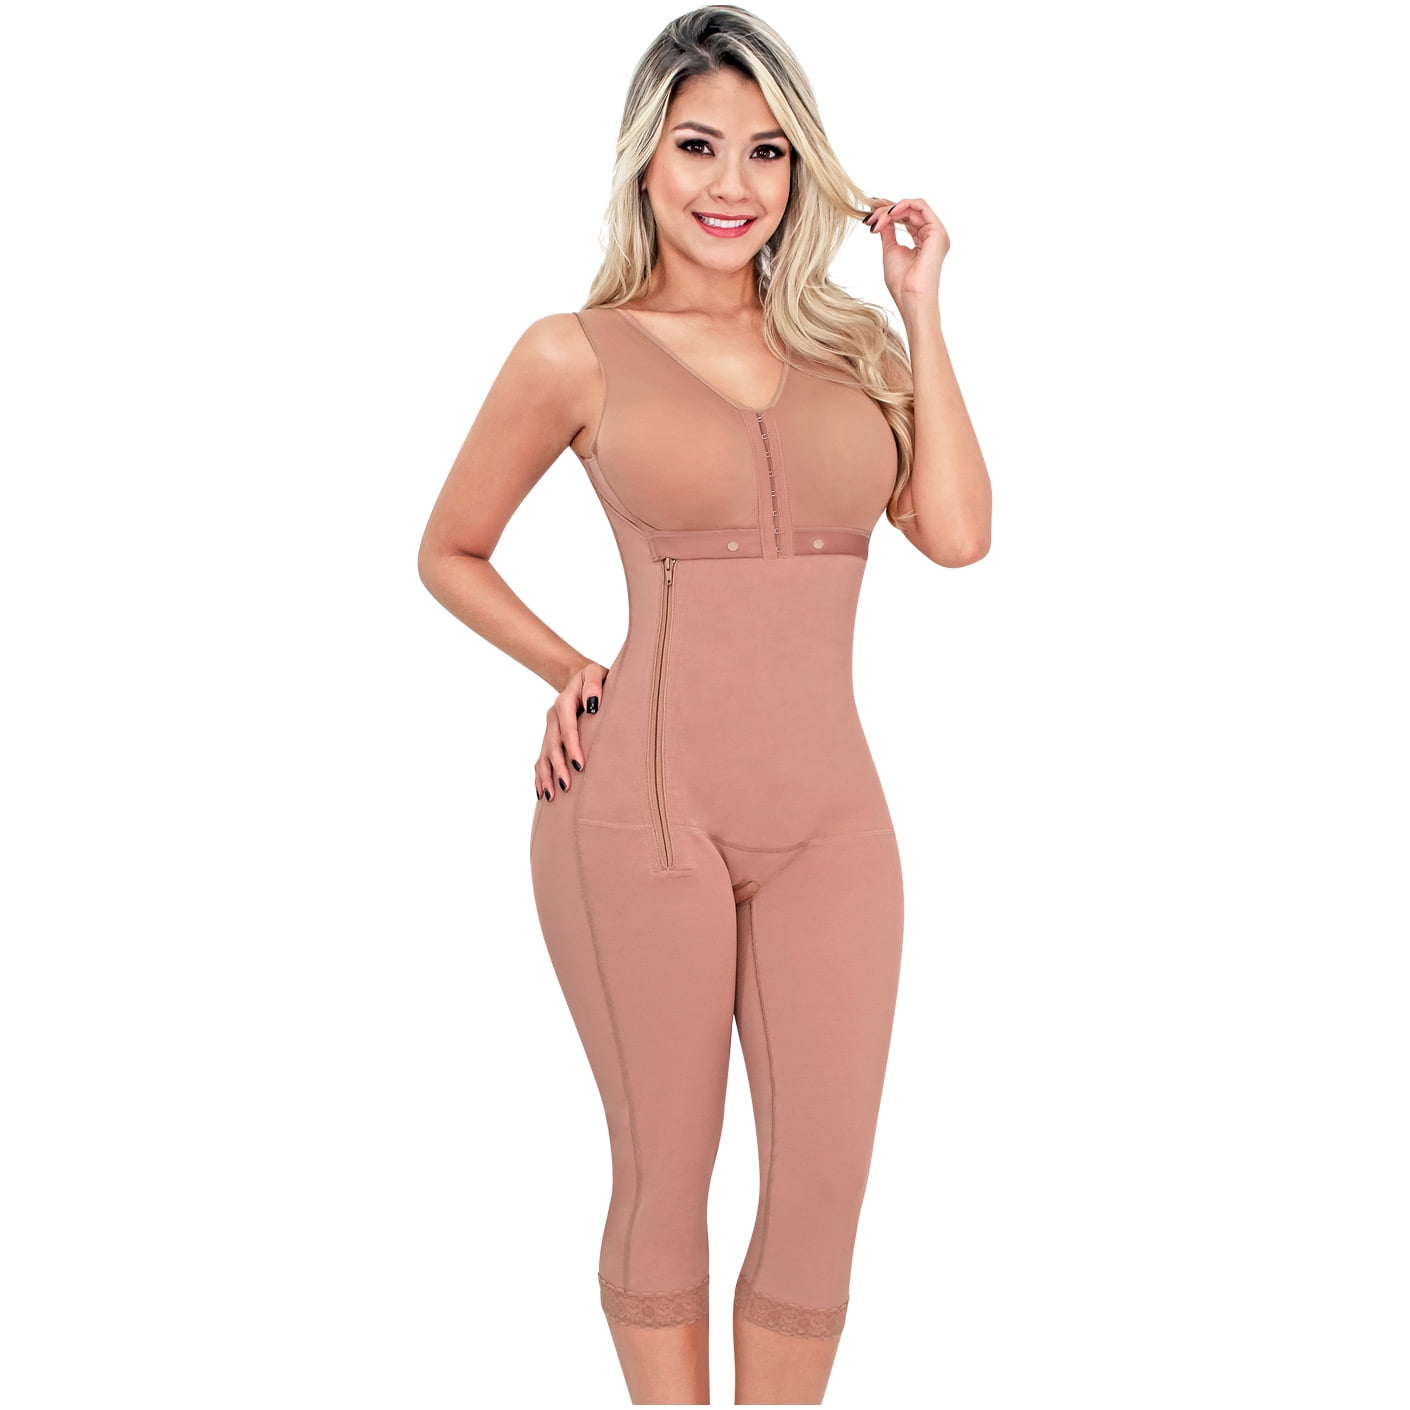 Sonryse 052 Full Body Shaper for Women Liposuction Compression Garments